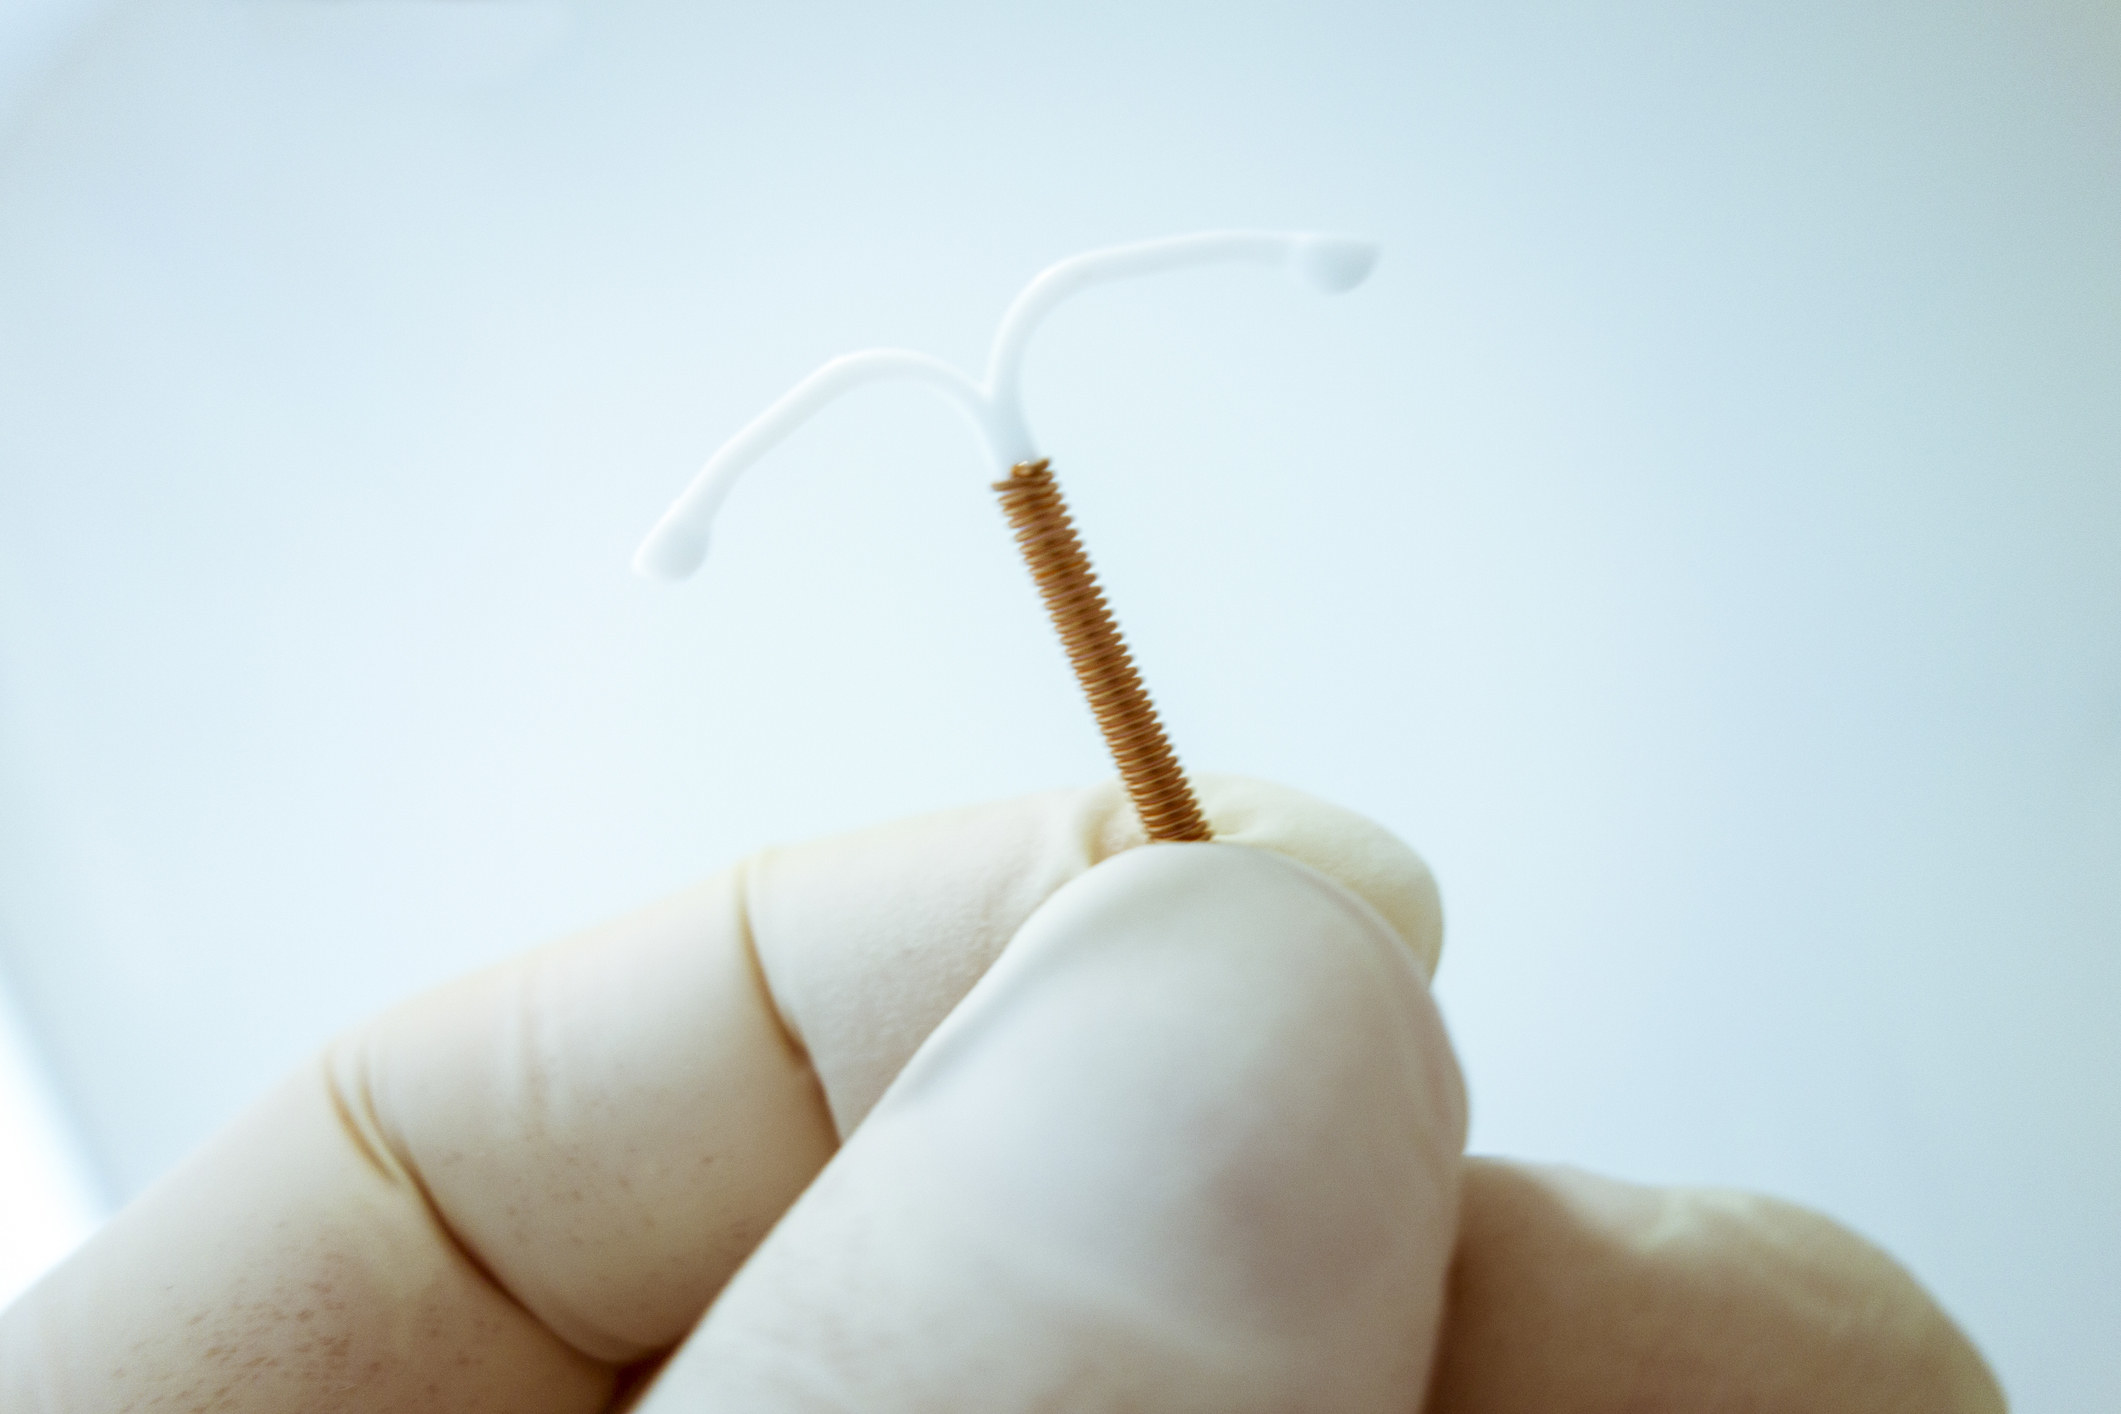 A stock image of the copper IUD